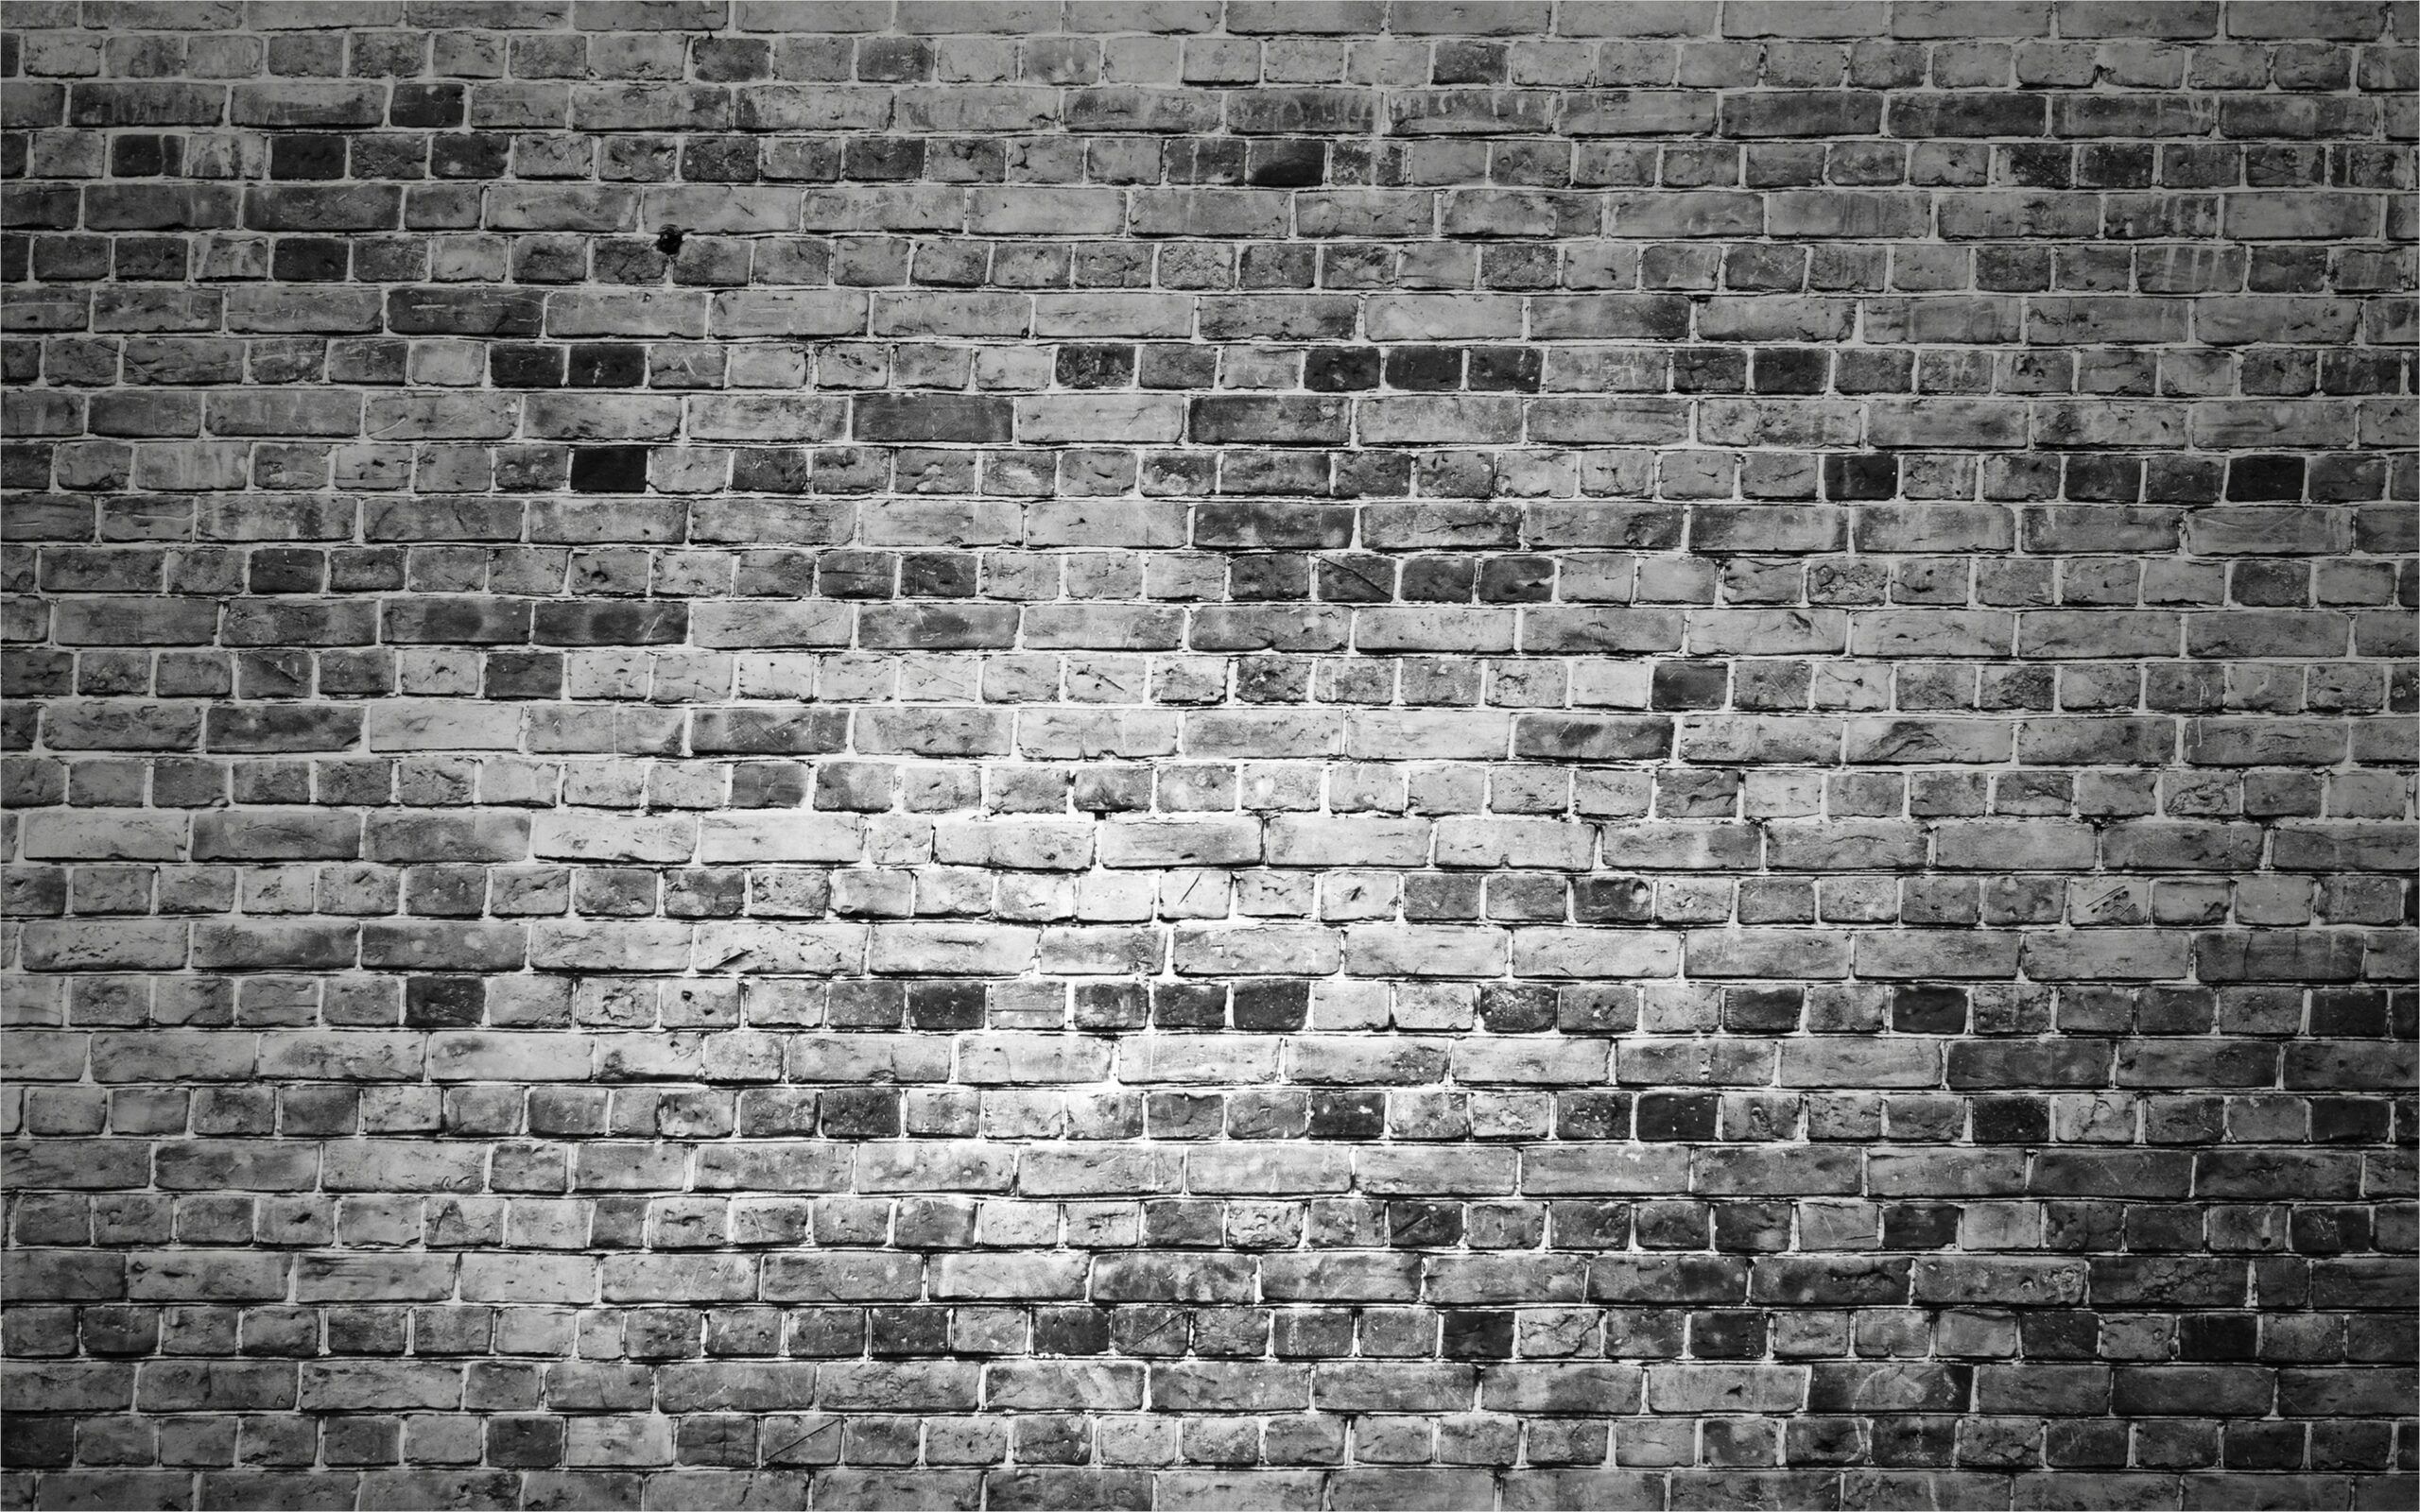 Brick Wall Wallpaper 4k. Brick wall wallpaper, Wall wallpaper, Brick wall